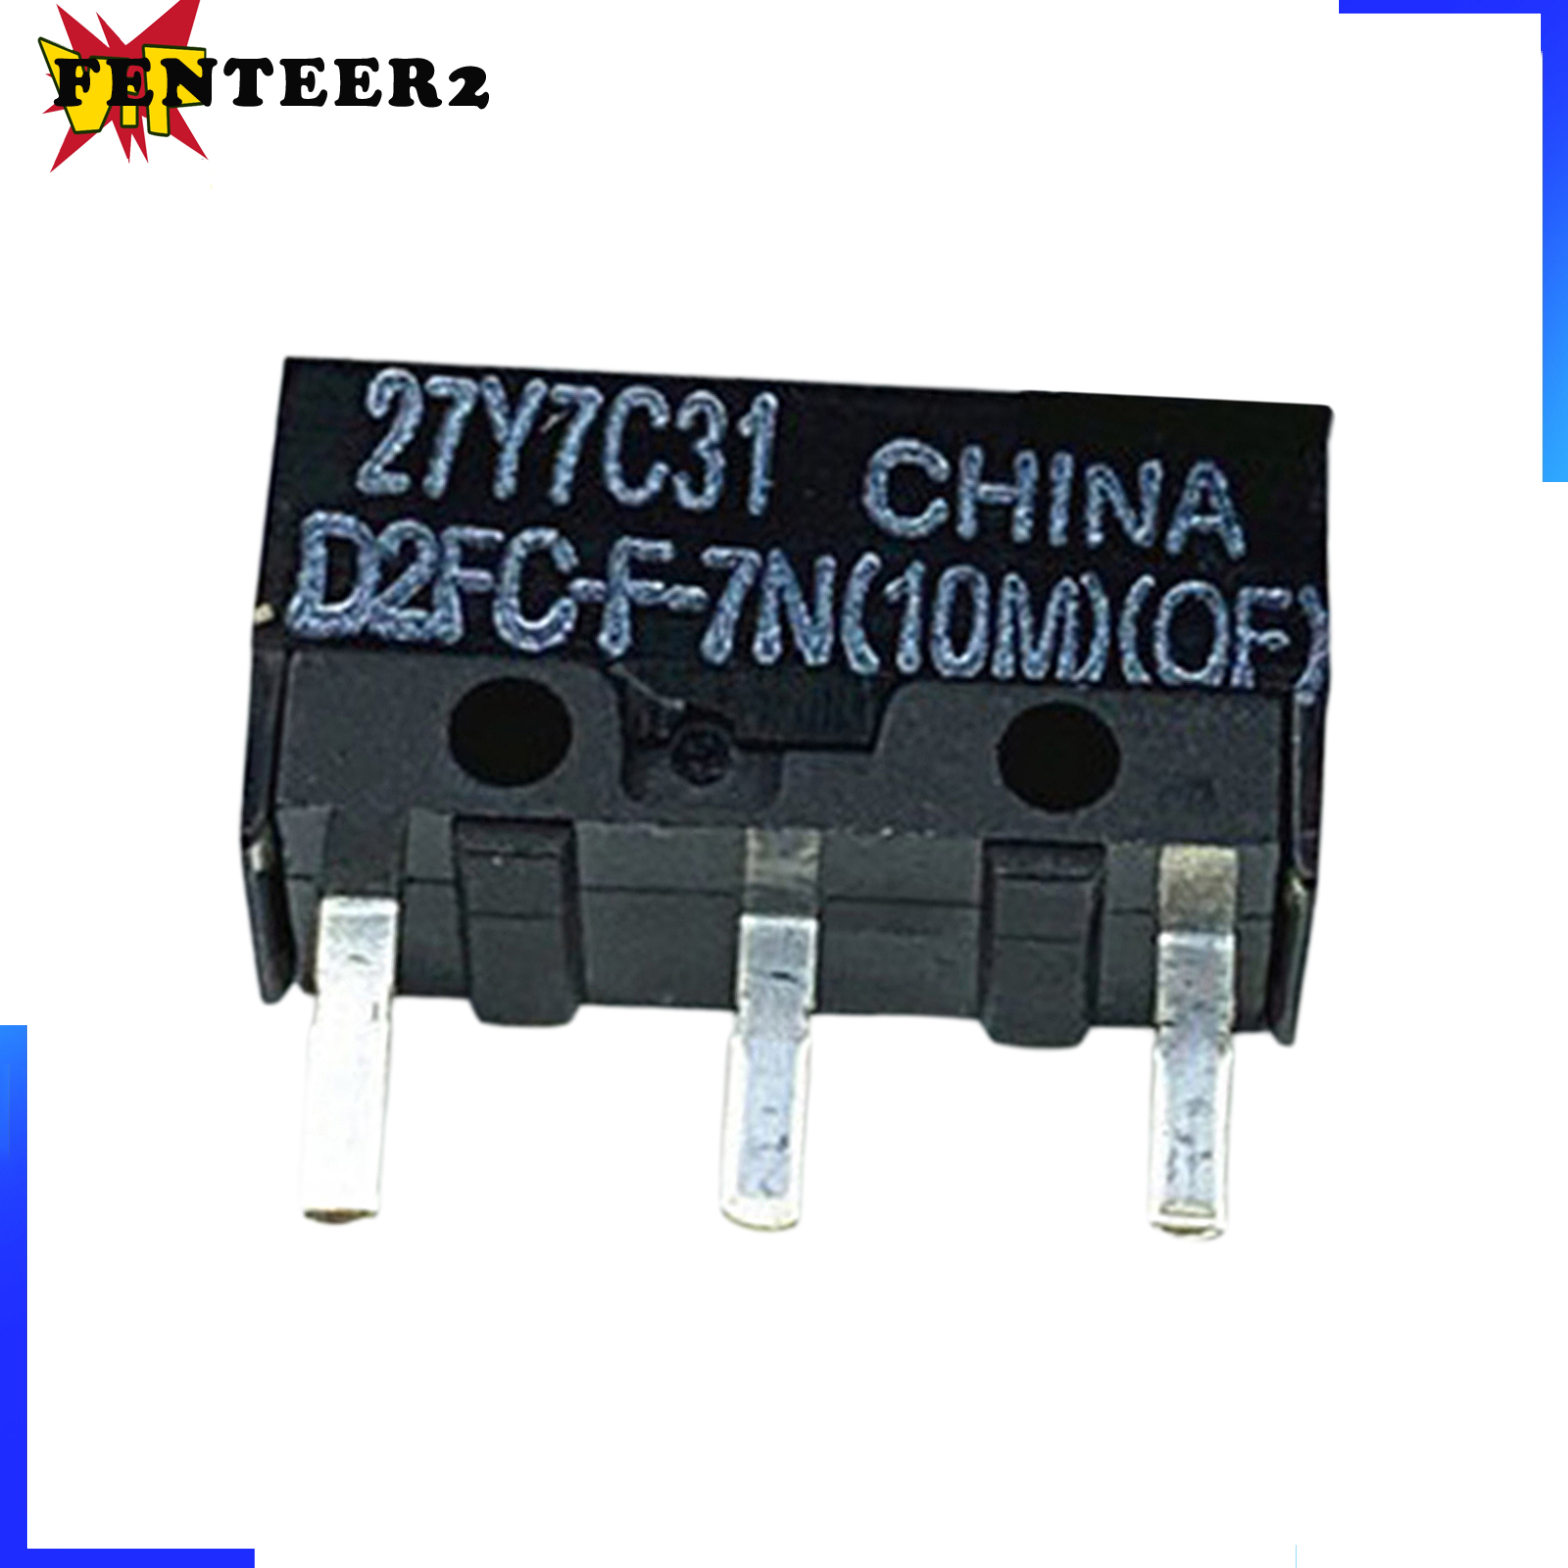 (Fenteer2 3c) Micro Switch Switch Cho Chuột